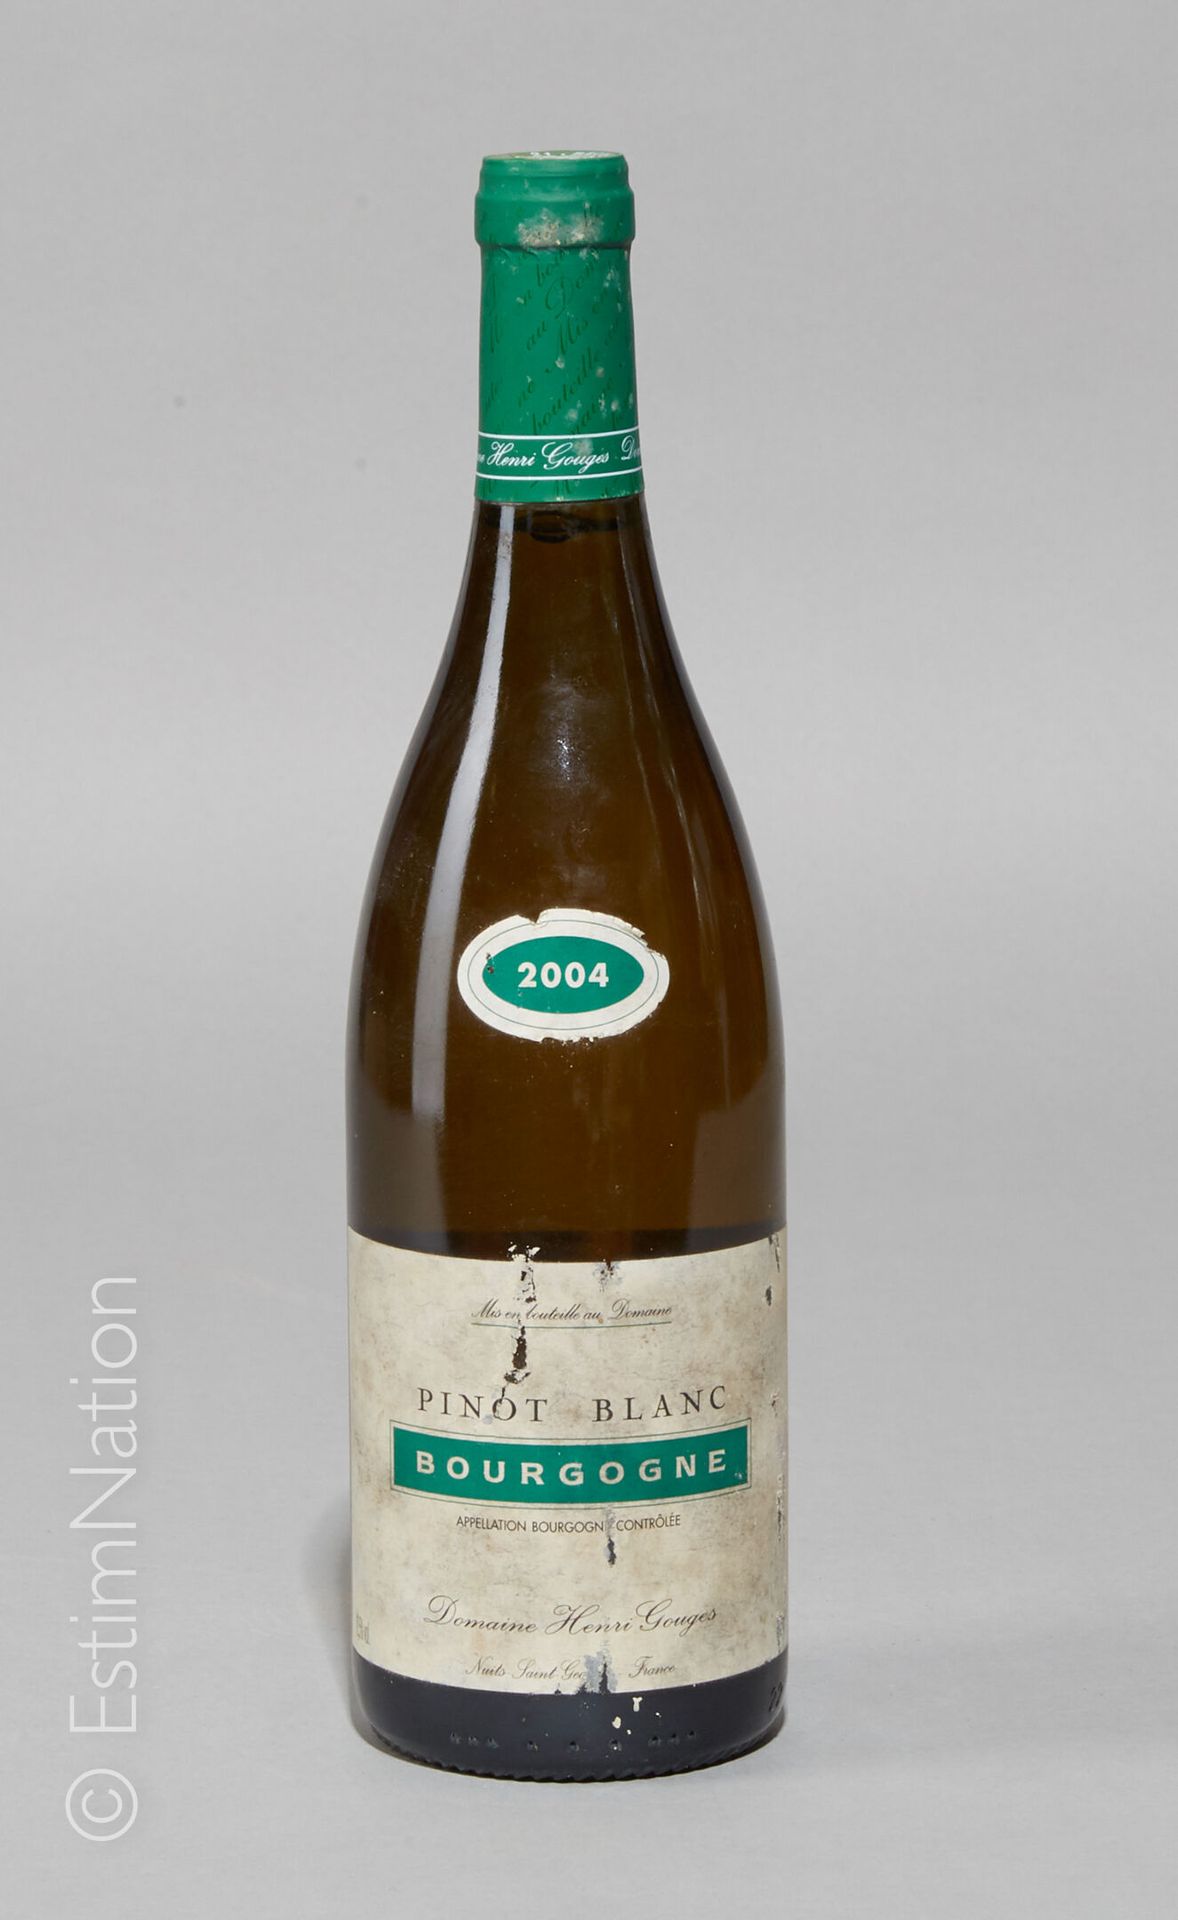 BOURGOGNE 1 Flasche Burgunder 2004 (Pinot Blanc) Domaine Henri Gouges